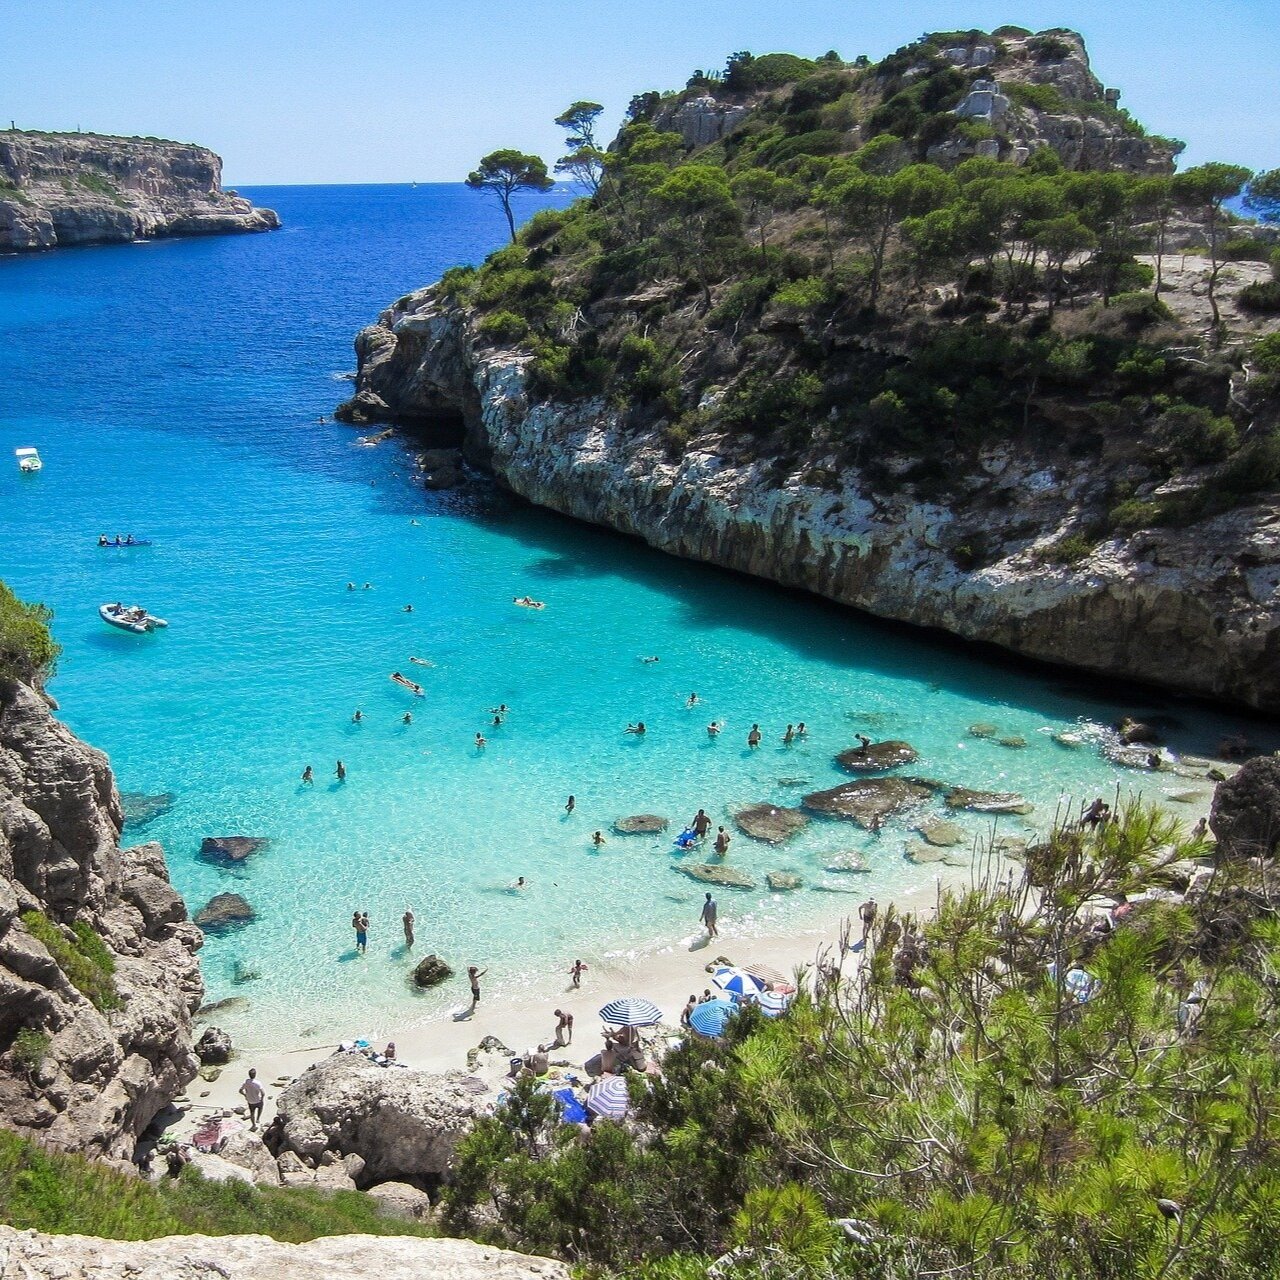 Beach in Mallorca. Photo by fahi on Pixabay